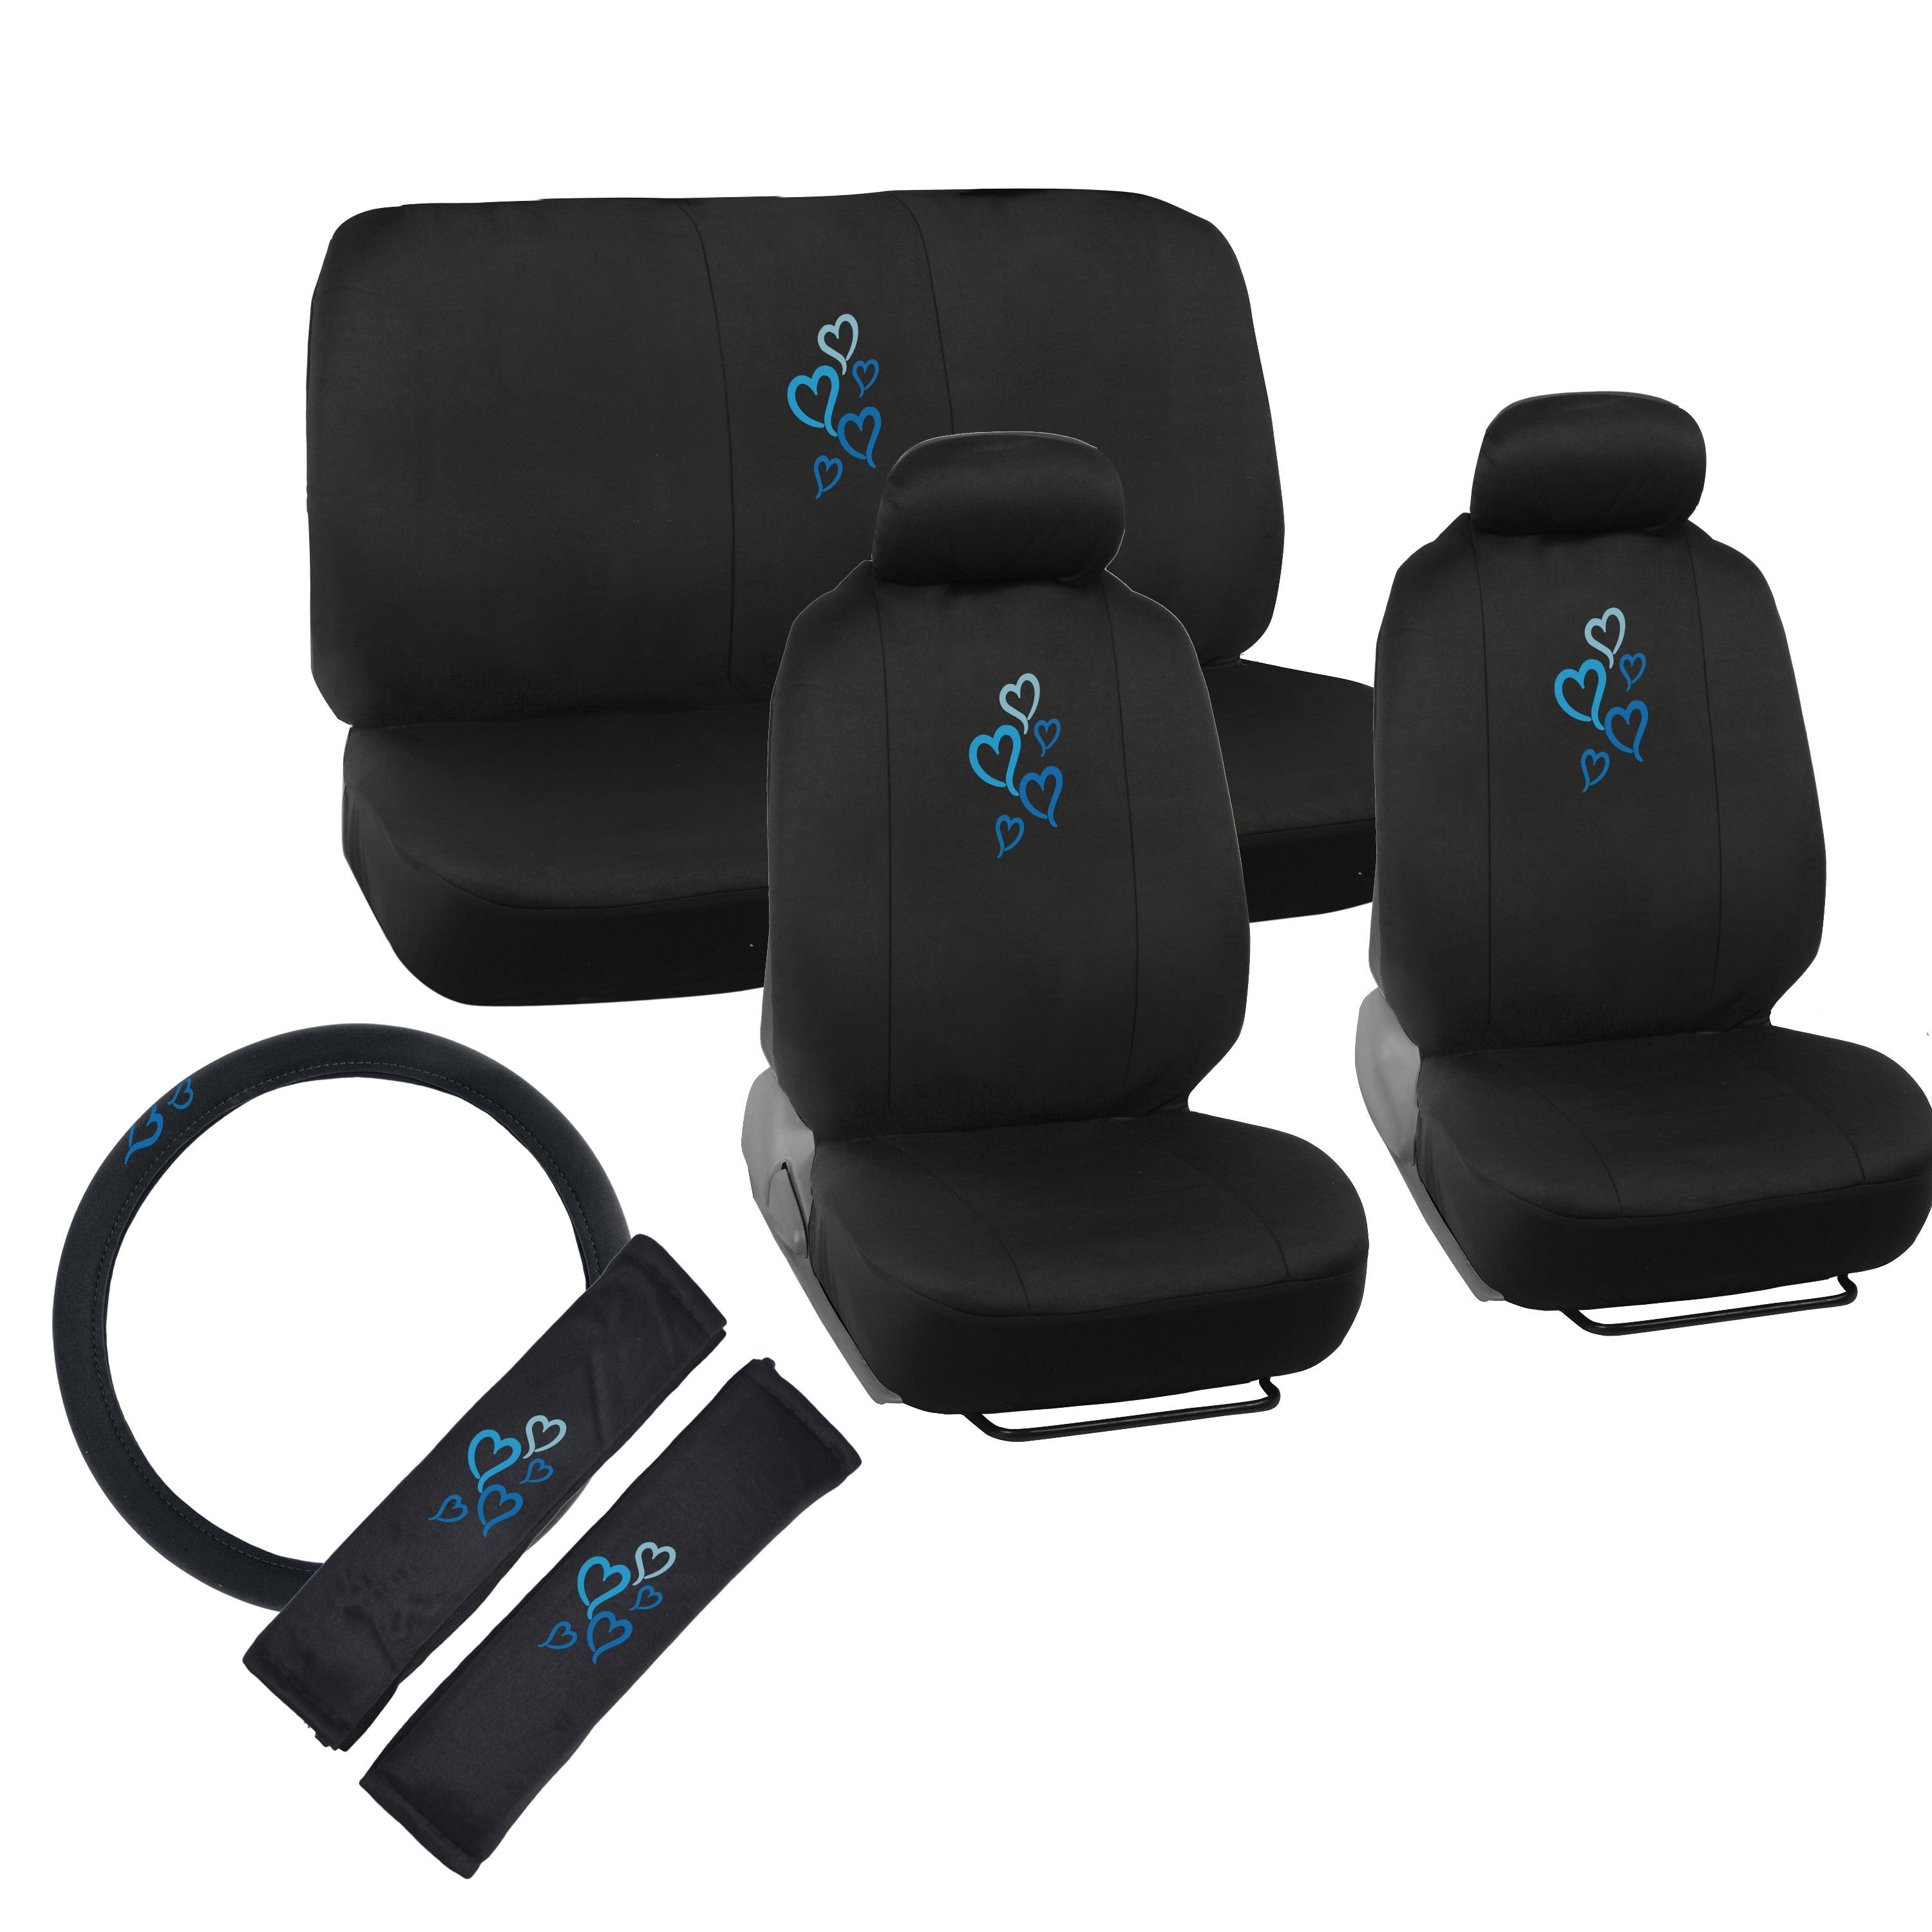 BDK Heart Design Car Seat Covers Full set (Universal Fit)  